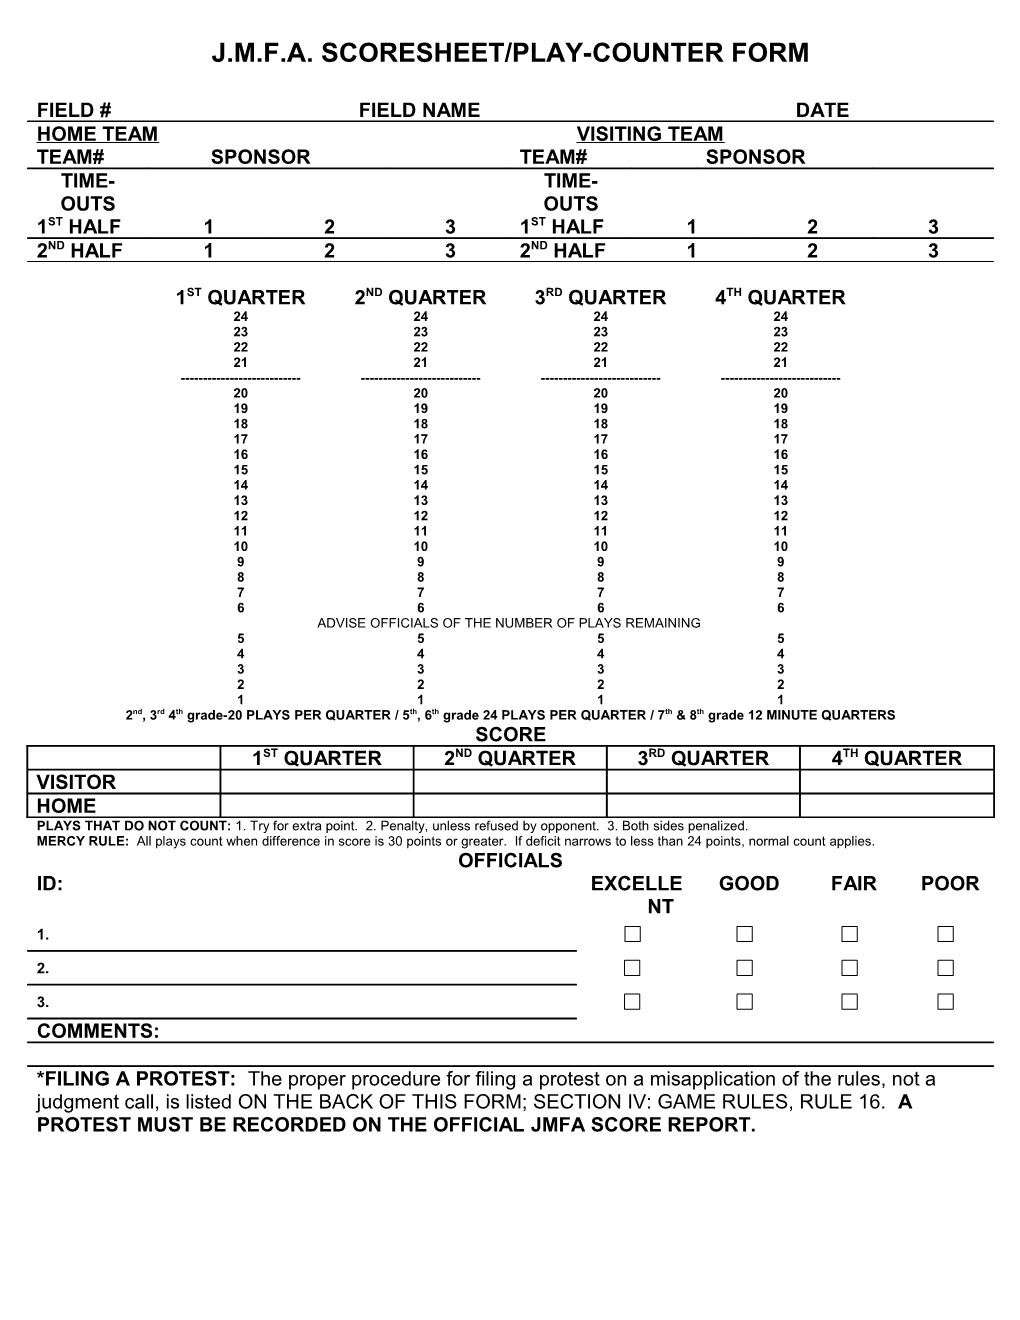 J.M.F.A. Scoresheet/Play-Counter Form